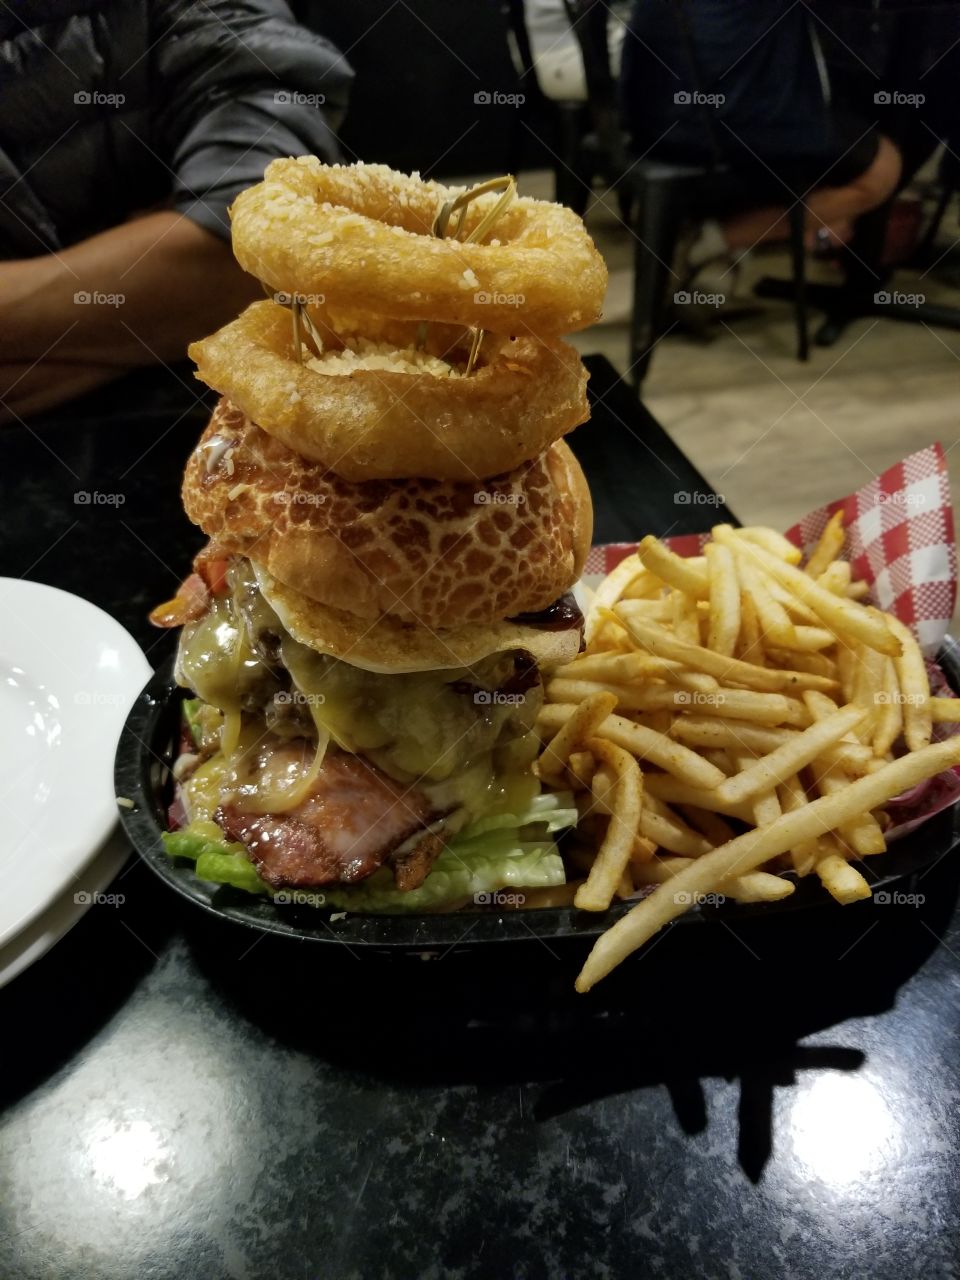 biggest hamburger I ever ate